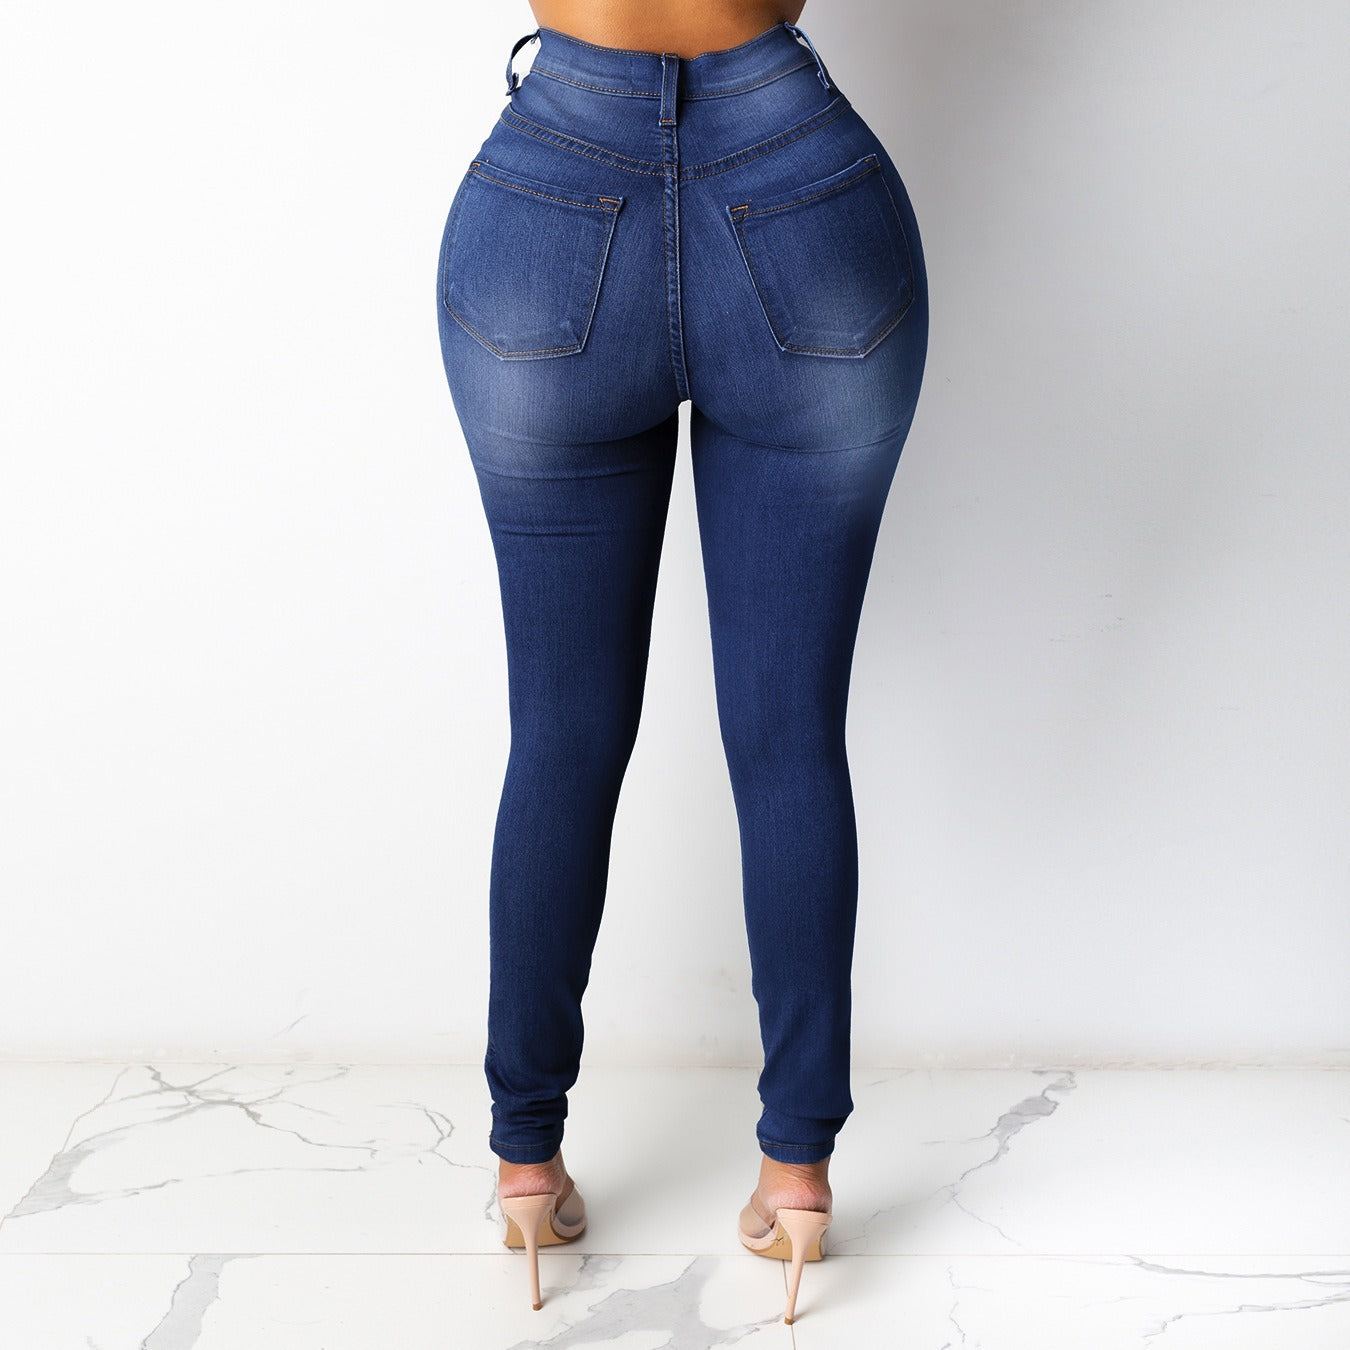 Denim Jeans For Women 4 The Ladies Fashion